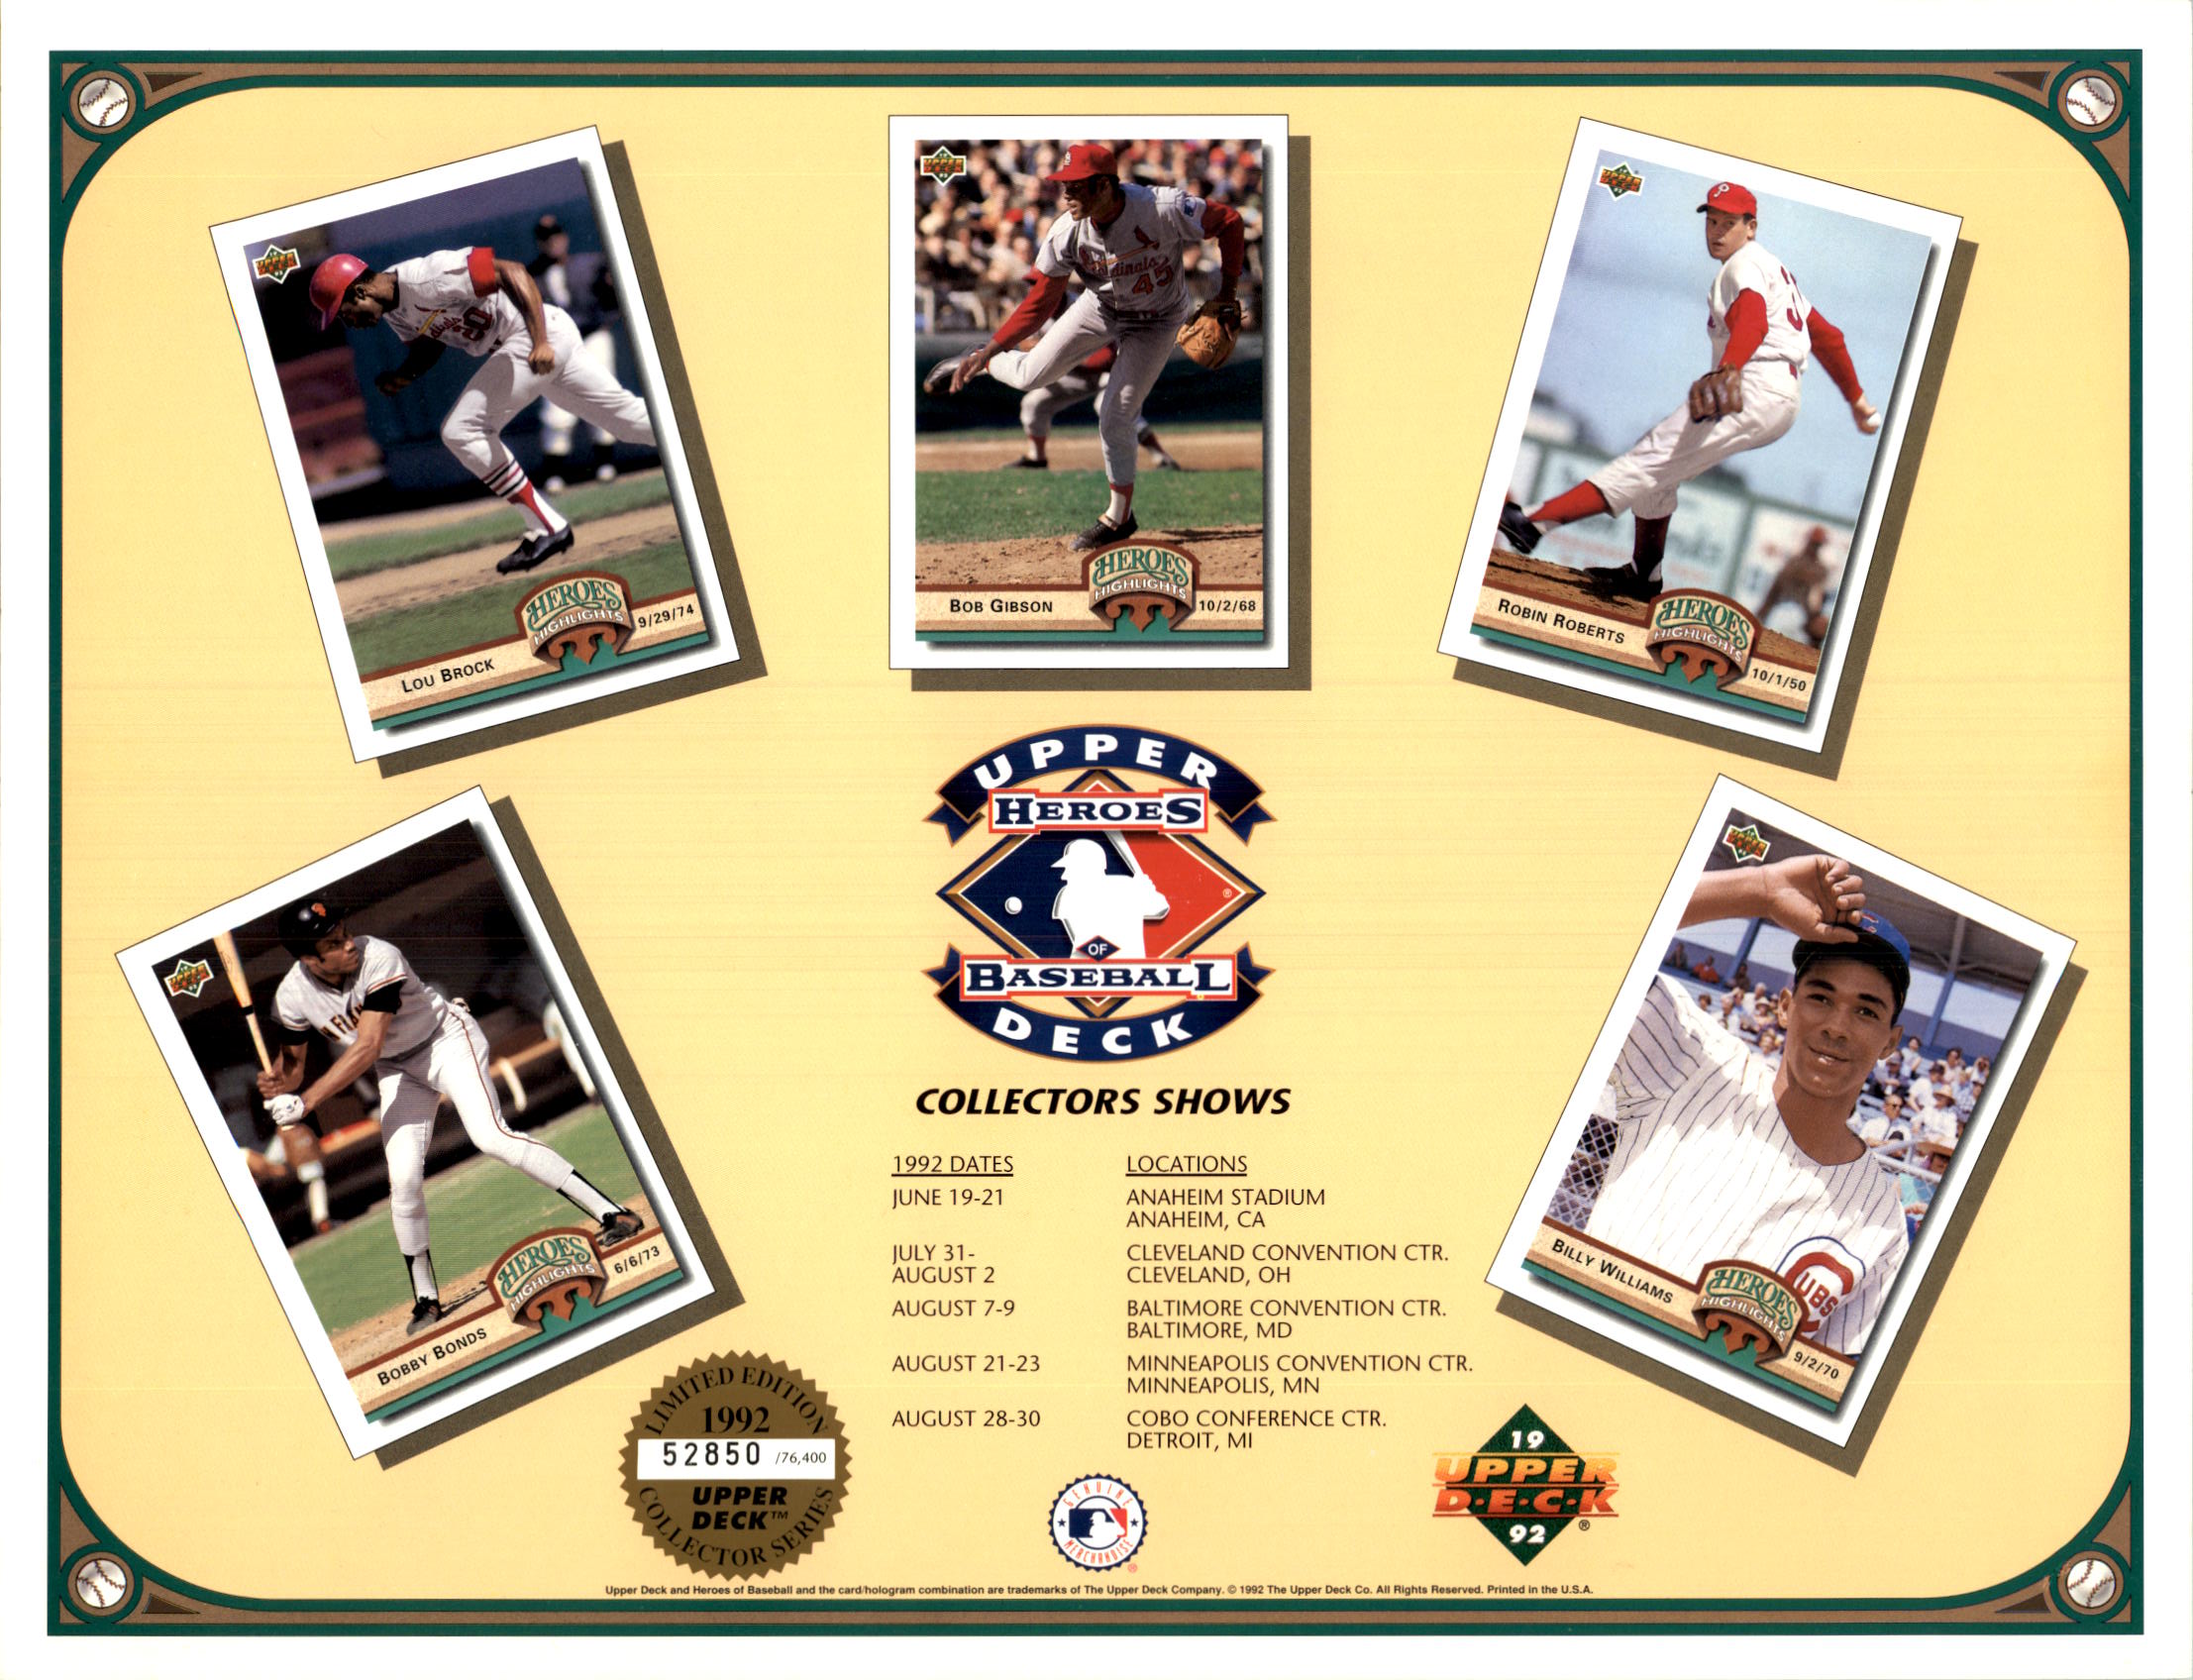 1992 Upper Deck Sheets #35 Upper Deck Heroes of/Baseball Shows/Bobby Bonds/Lou Brock/Bob Gibson/Robin Roberts/Billy Williams/76,400